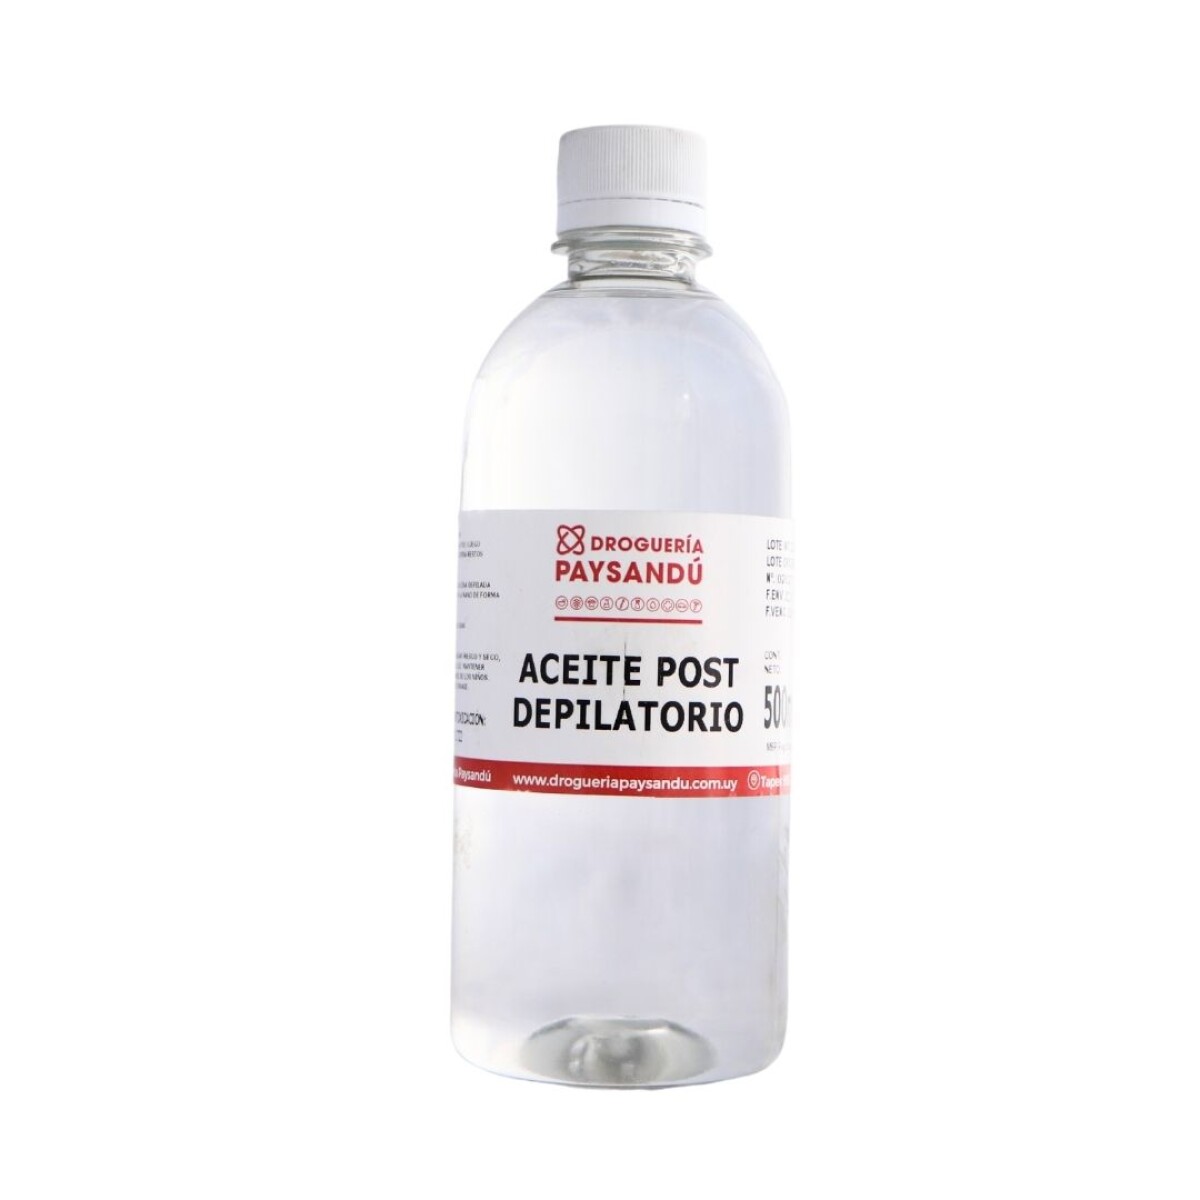 Aceite post depilatorio - 500 mL 